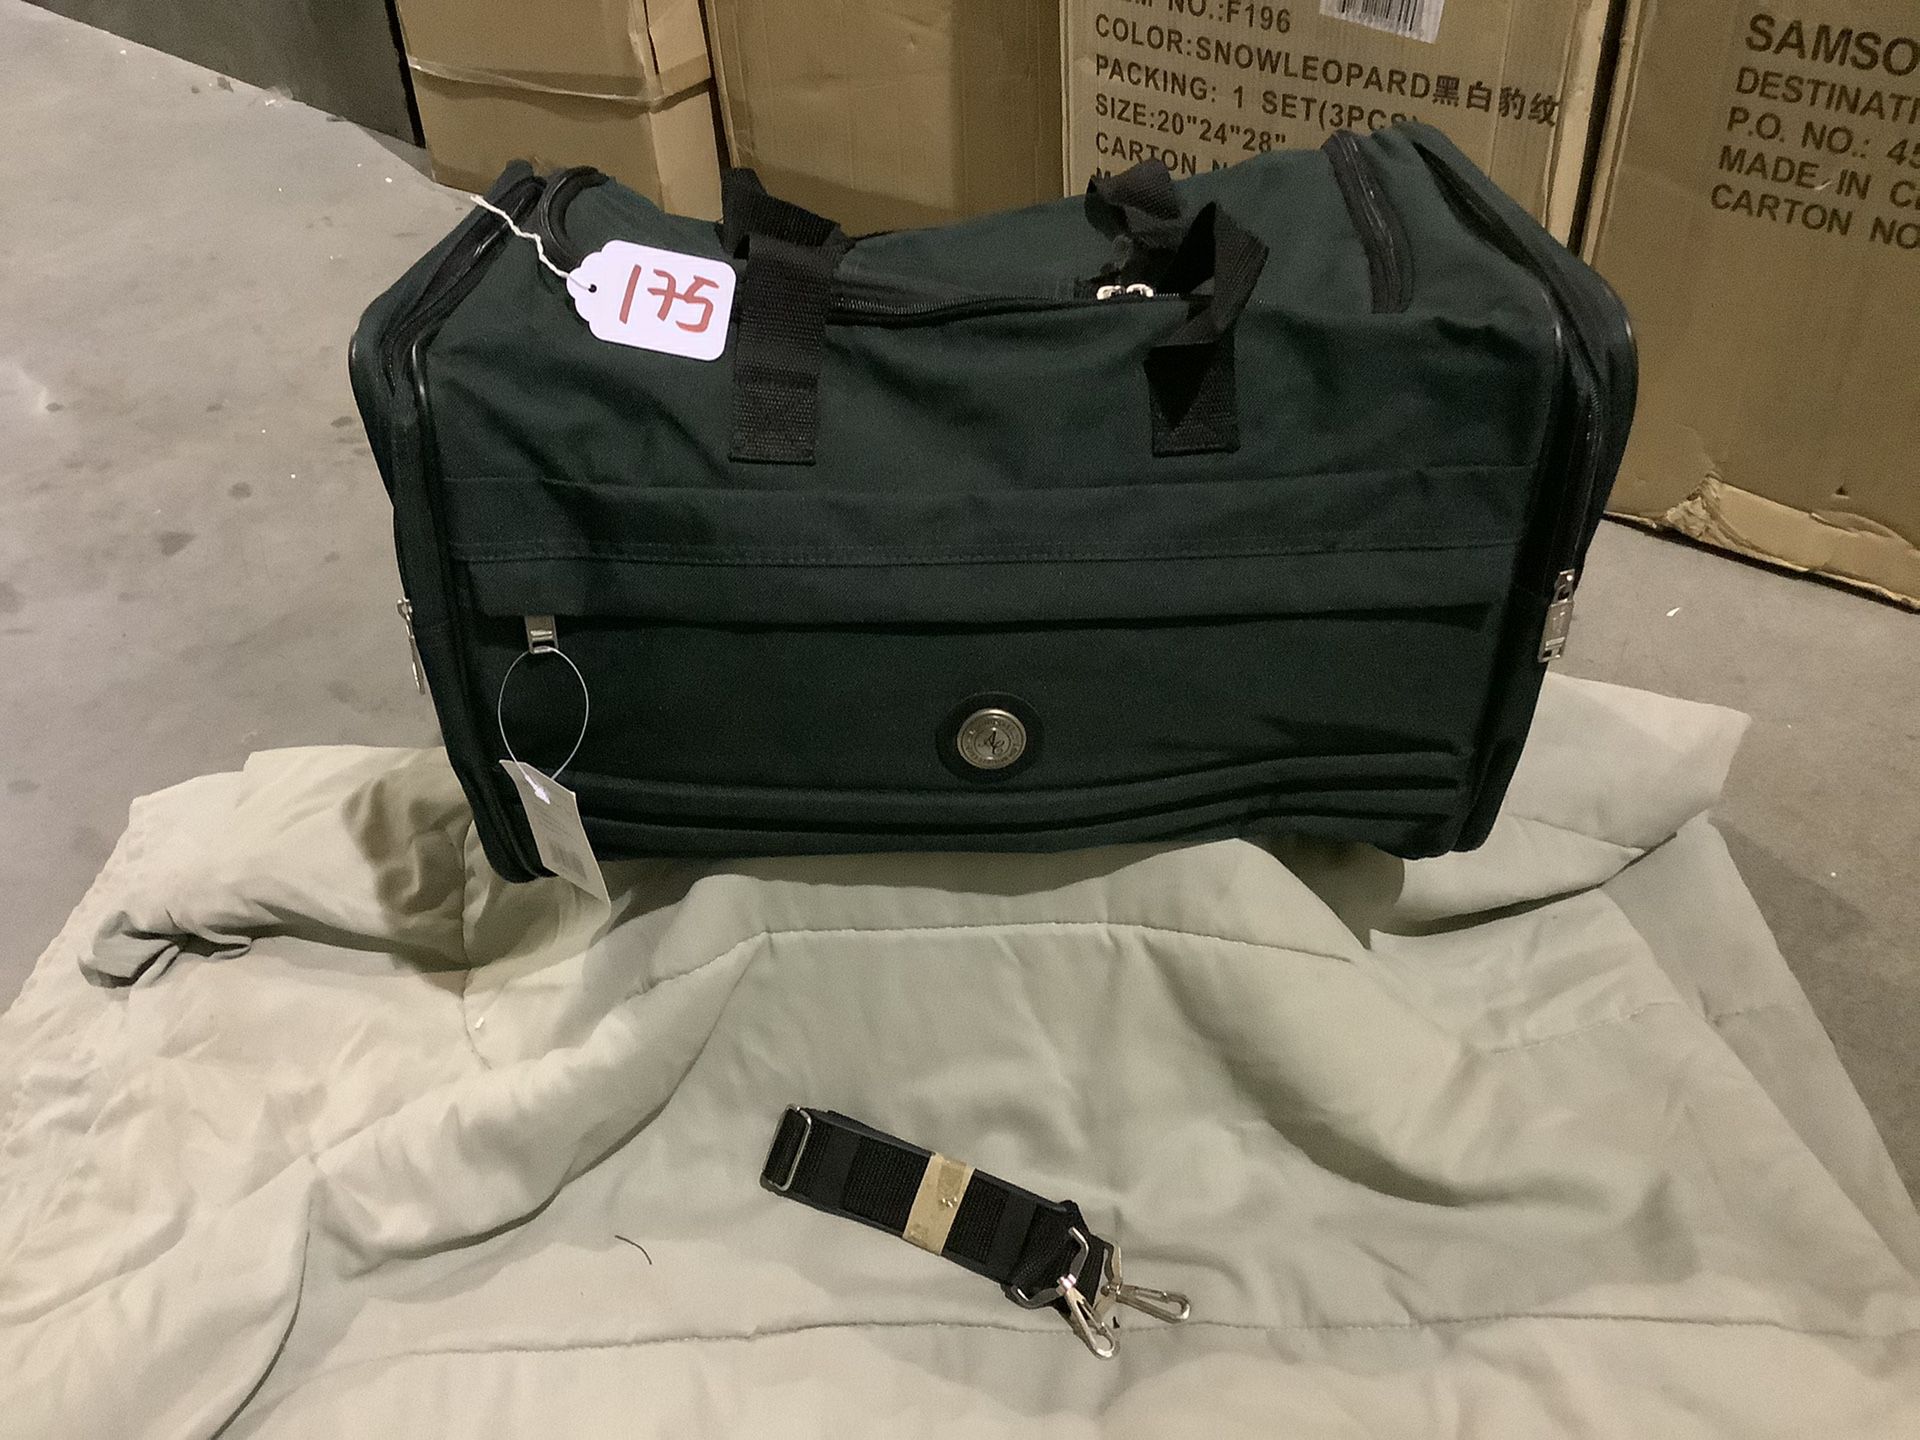 #175 Adventures Club 16-inch travel duffel tote bag - Dark Green - NEW